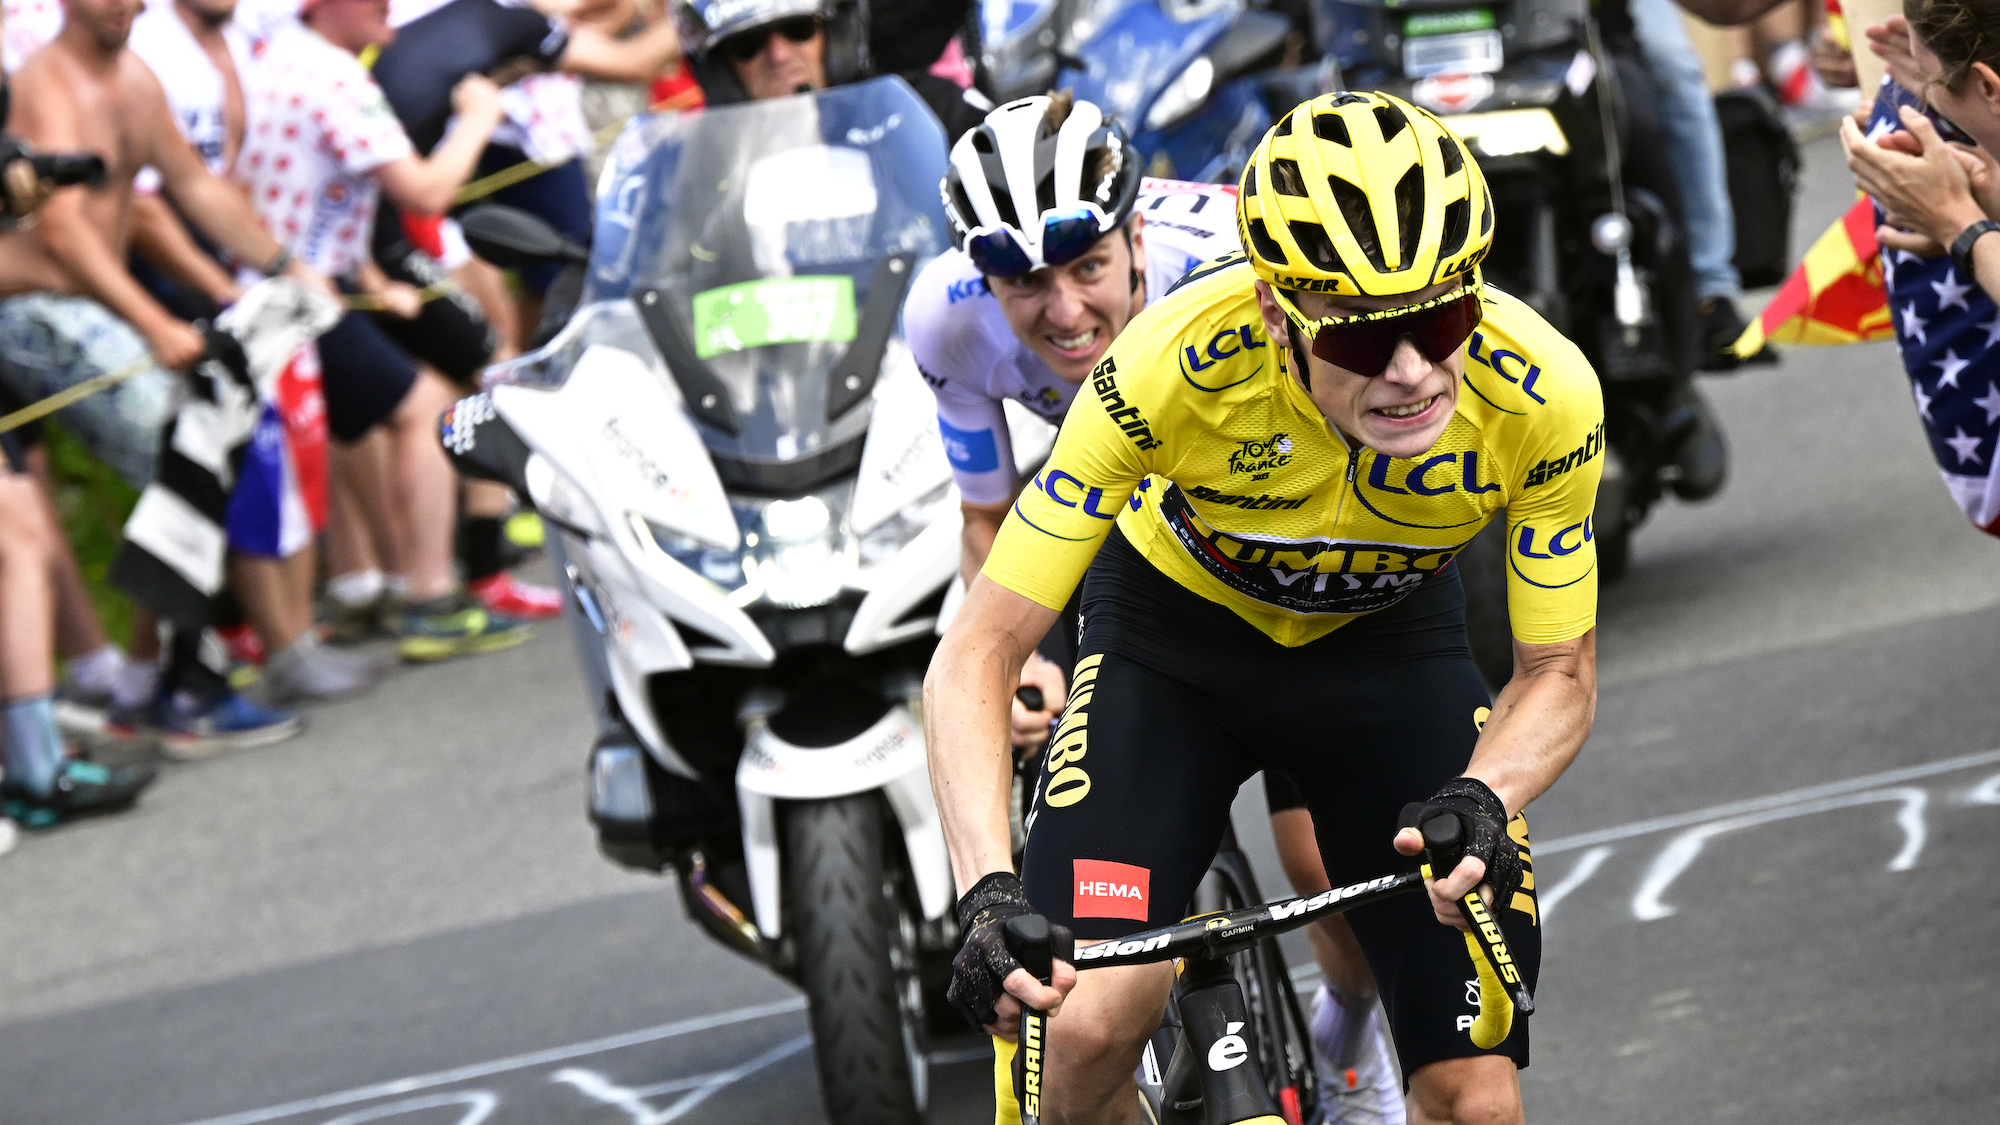  Tour de France: a return to the glory days? 